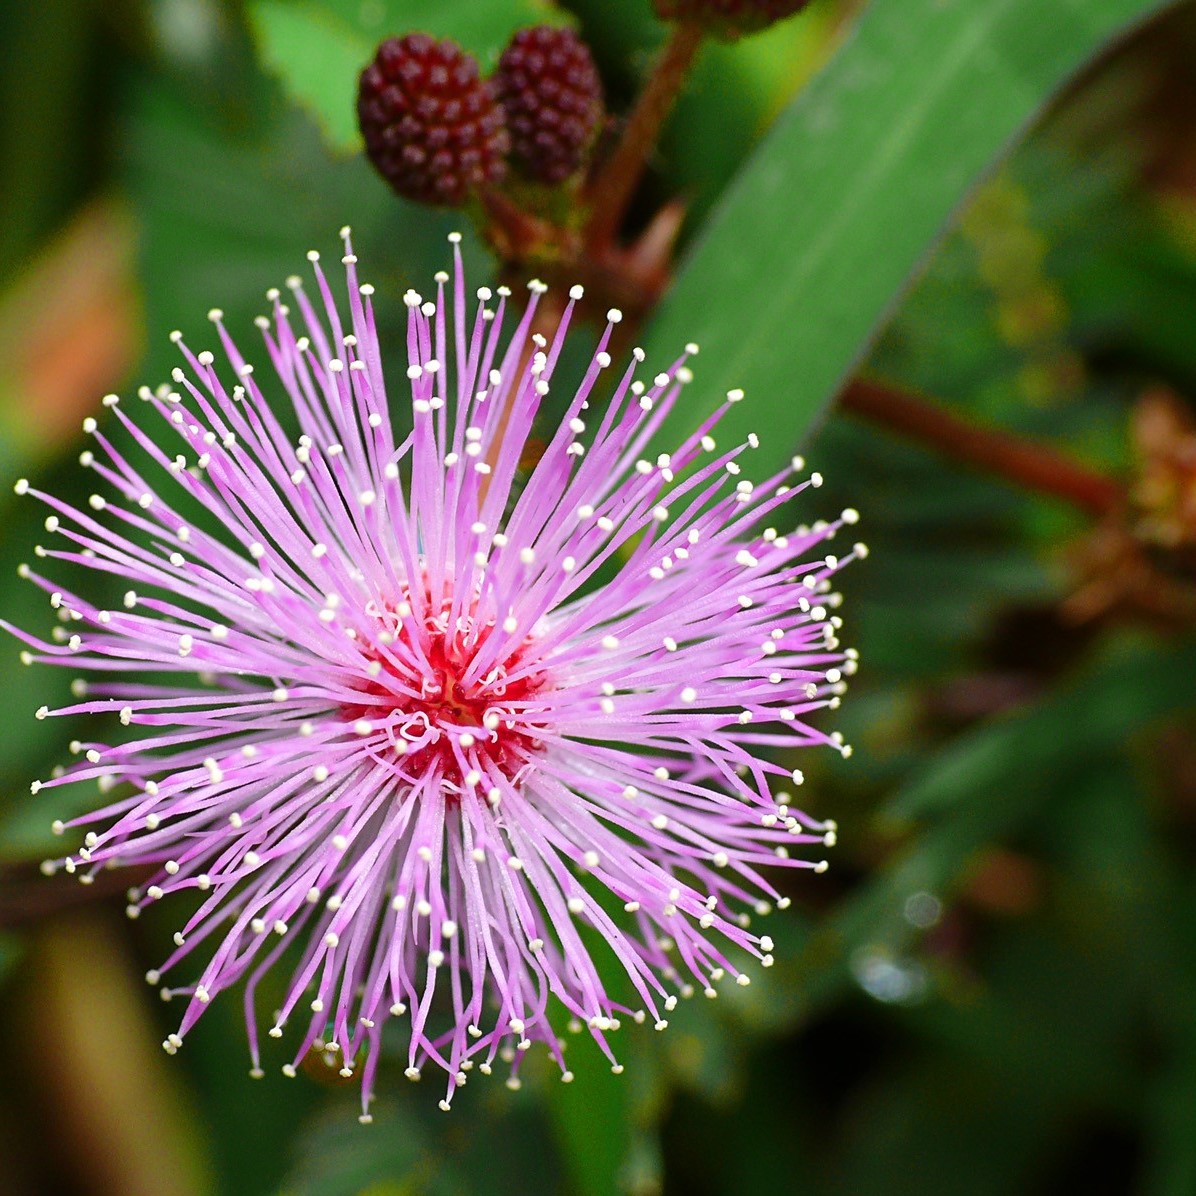 50 PCS Seeds Mimosa Bonsai Sensitive Splendid Flowers Plants Free Shipping NEW C 